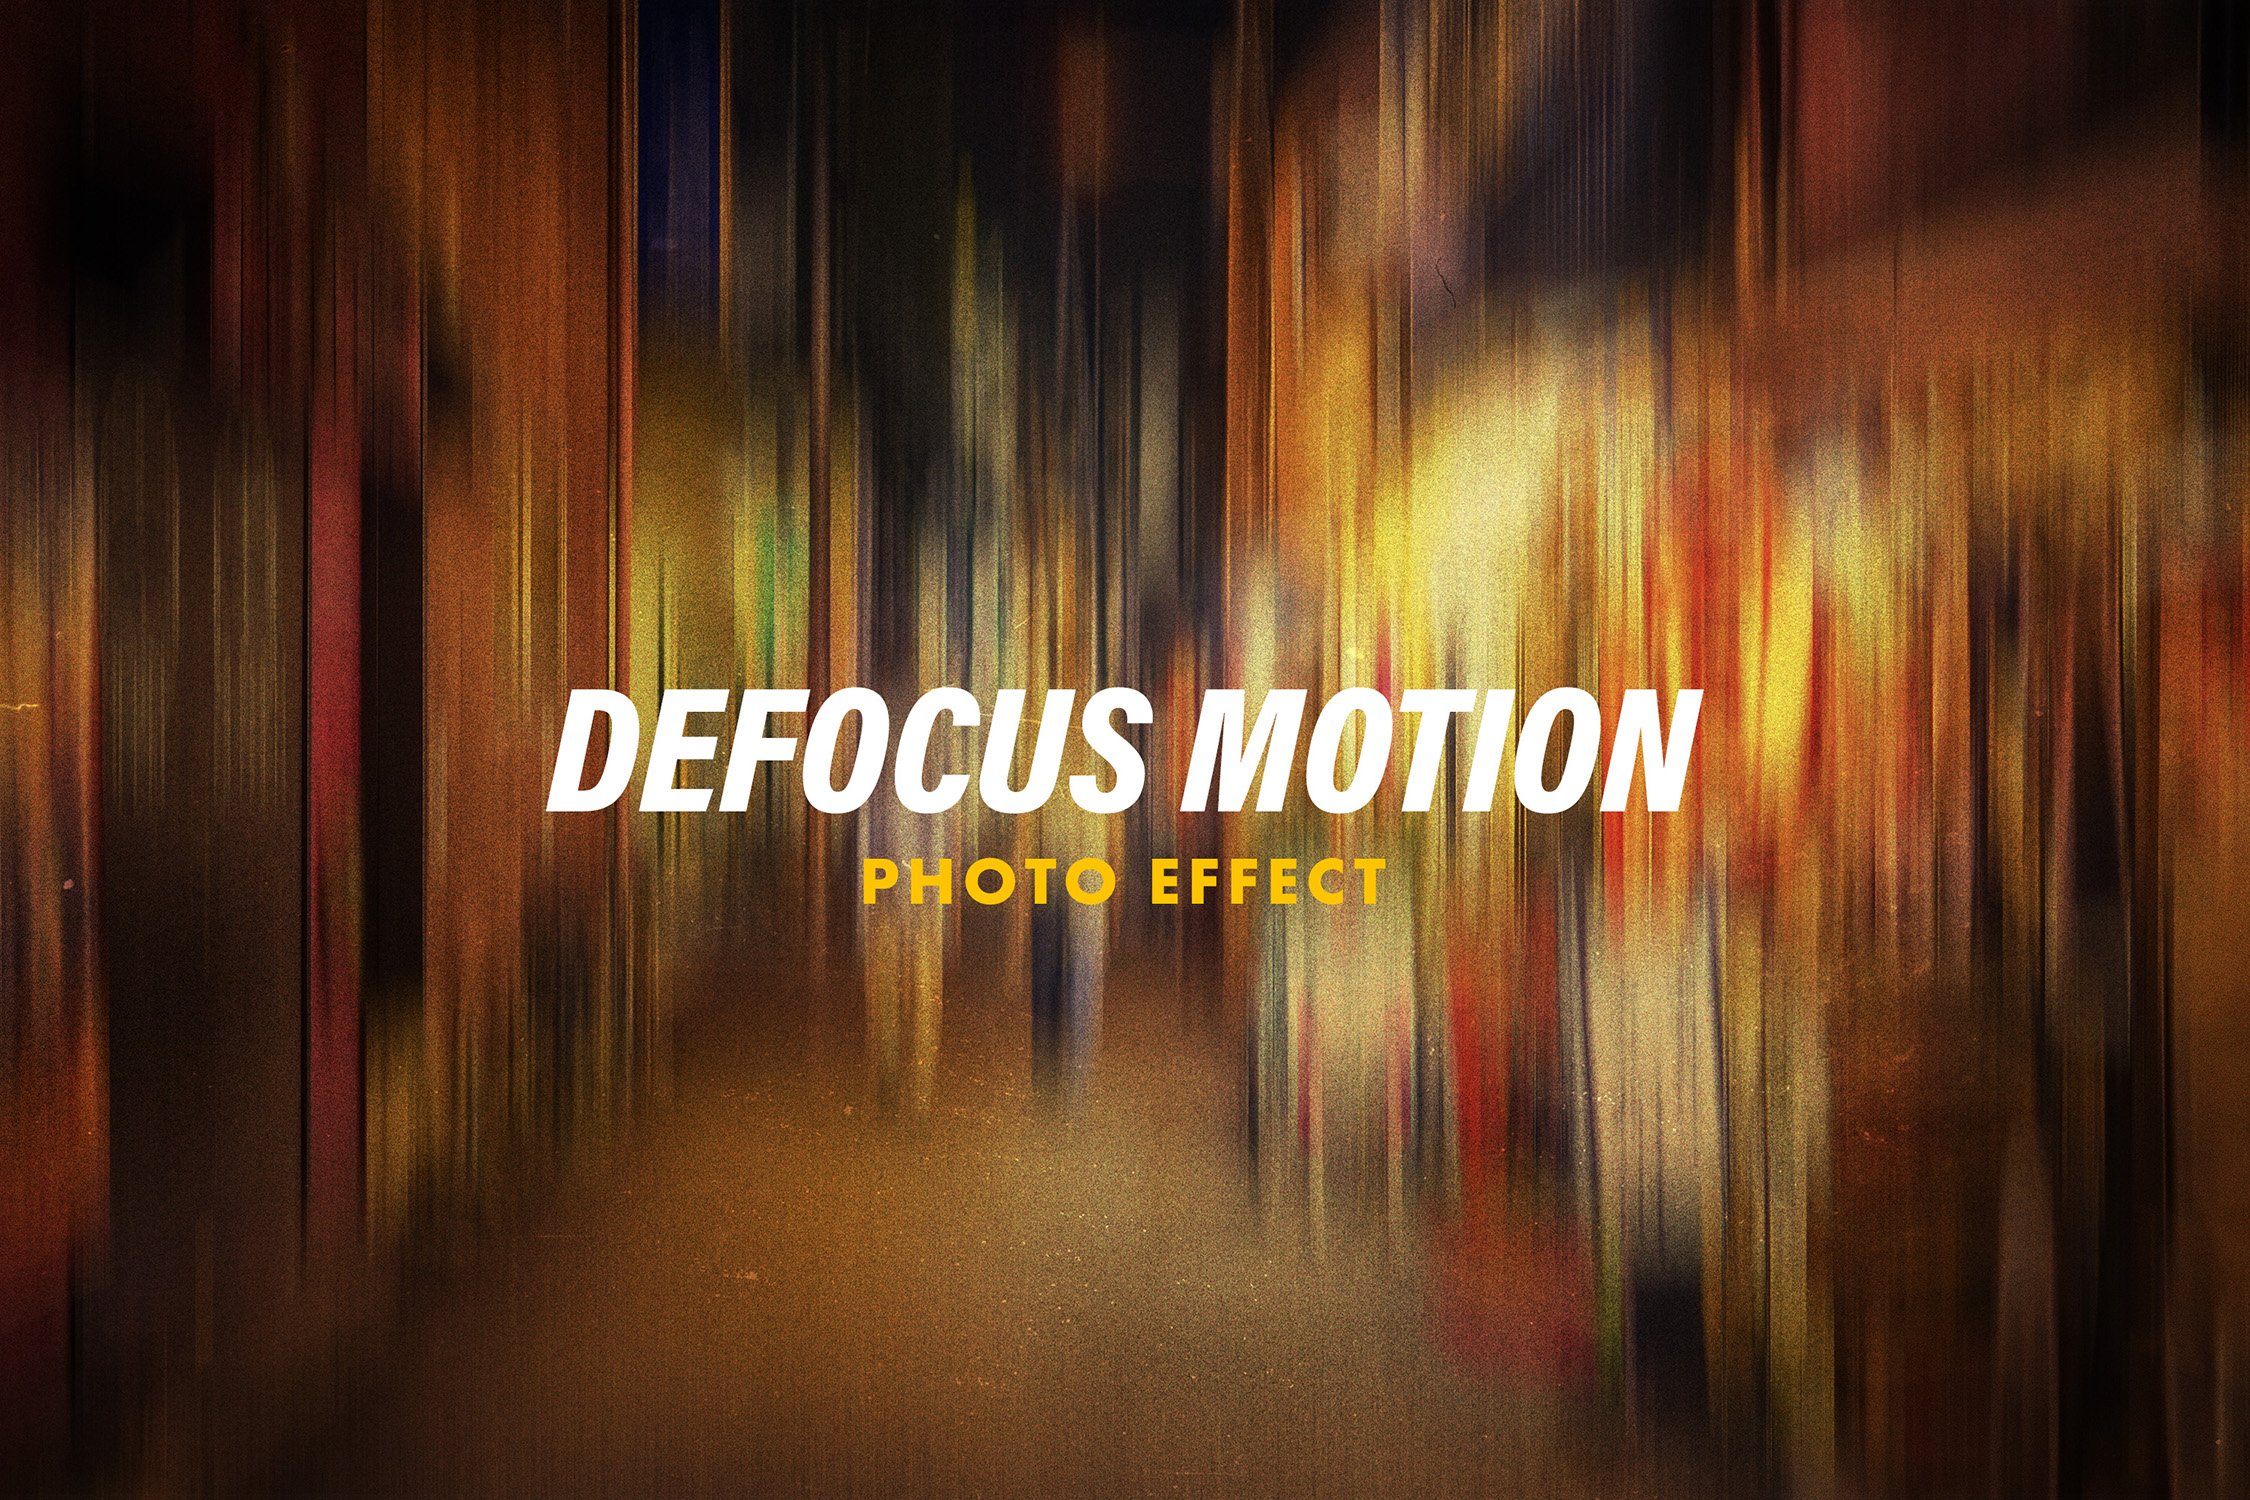 Defocus Motion Photo Effectcover image.